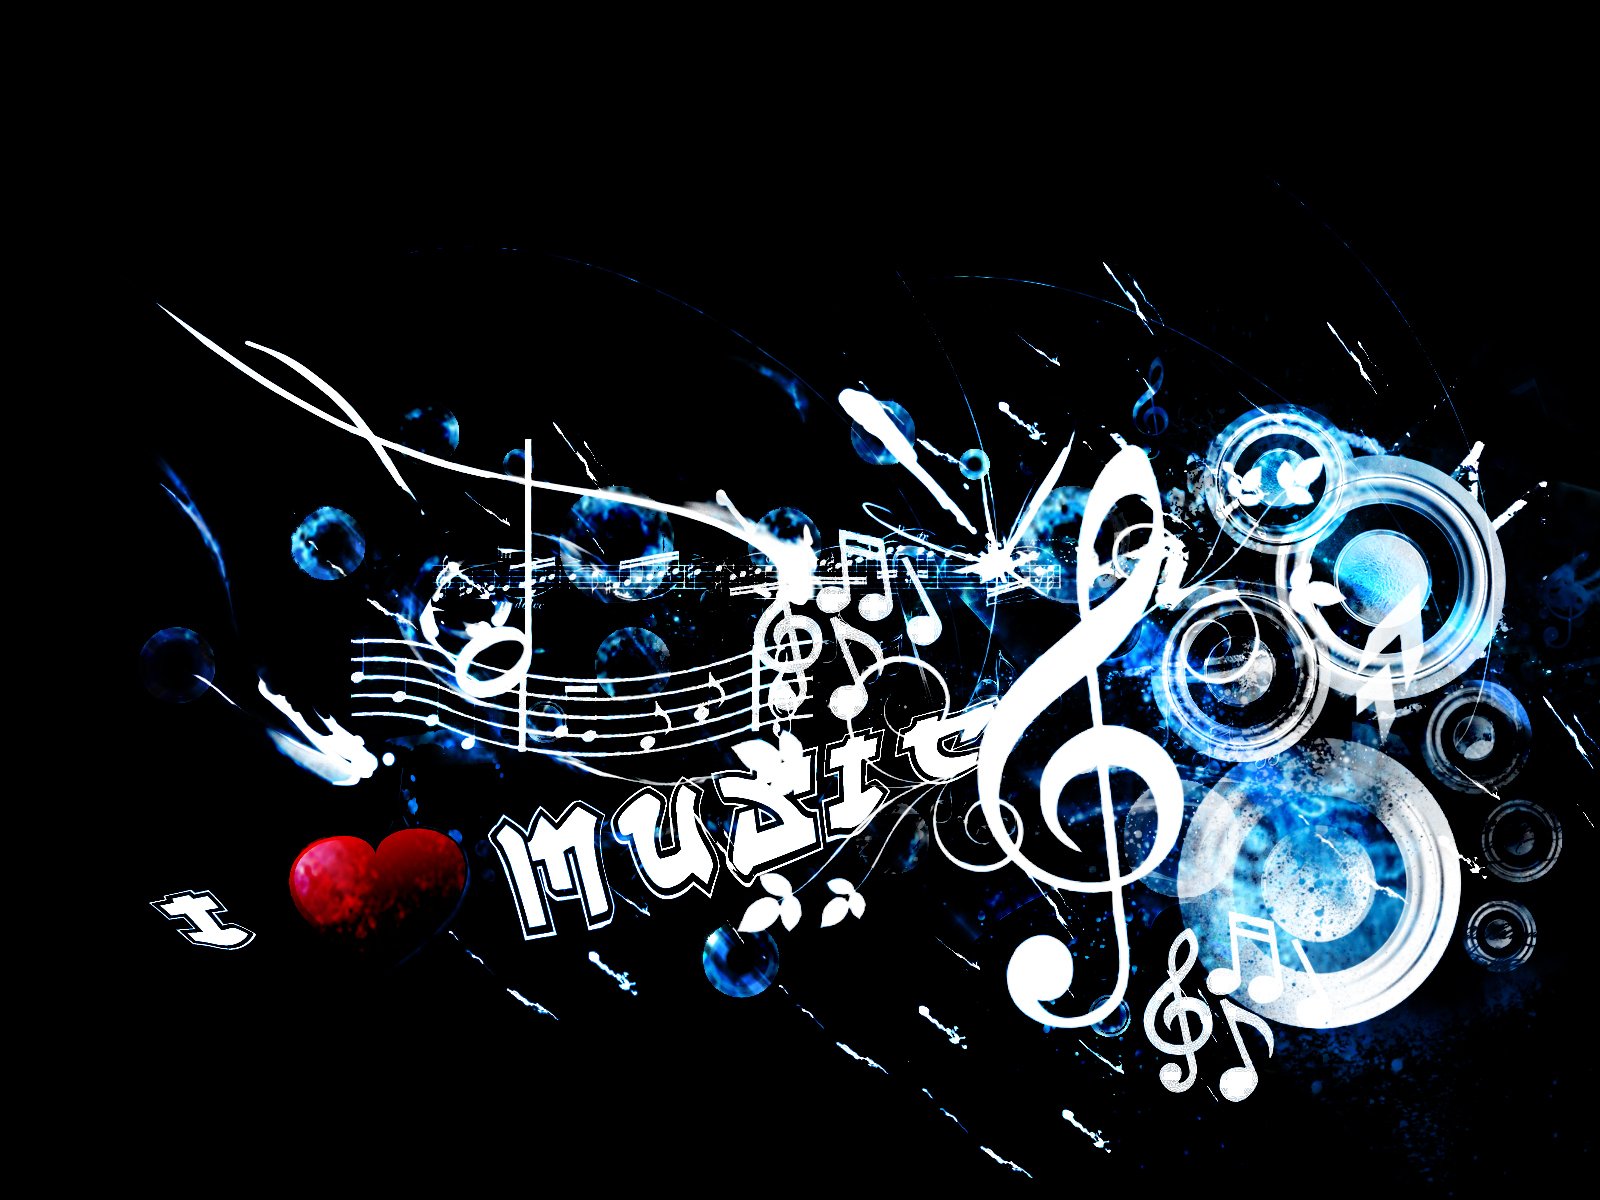  Free Music Hd Wallpapers Hd Music Screensavers Desktop Wallpapers